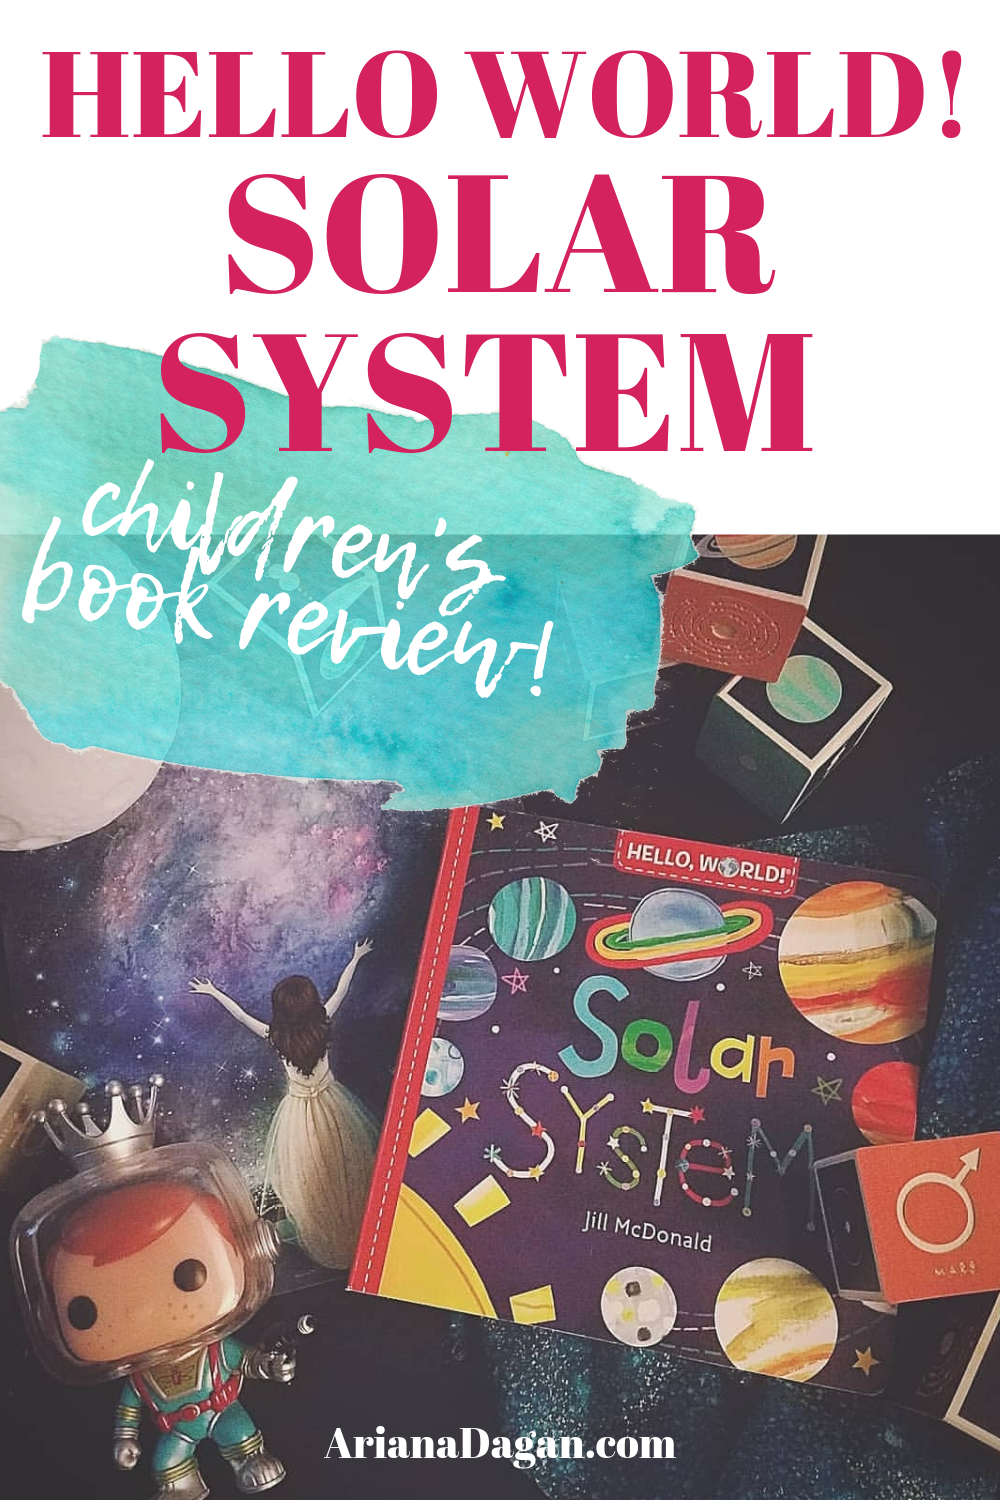 Hello World! Solar System Children’s Book Review